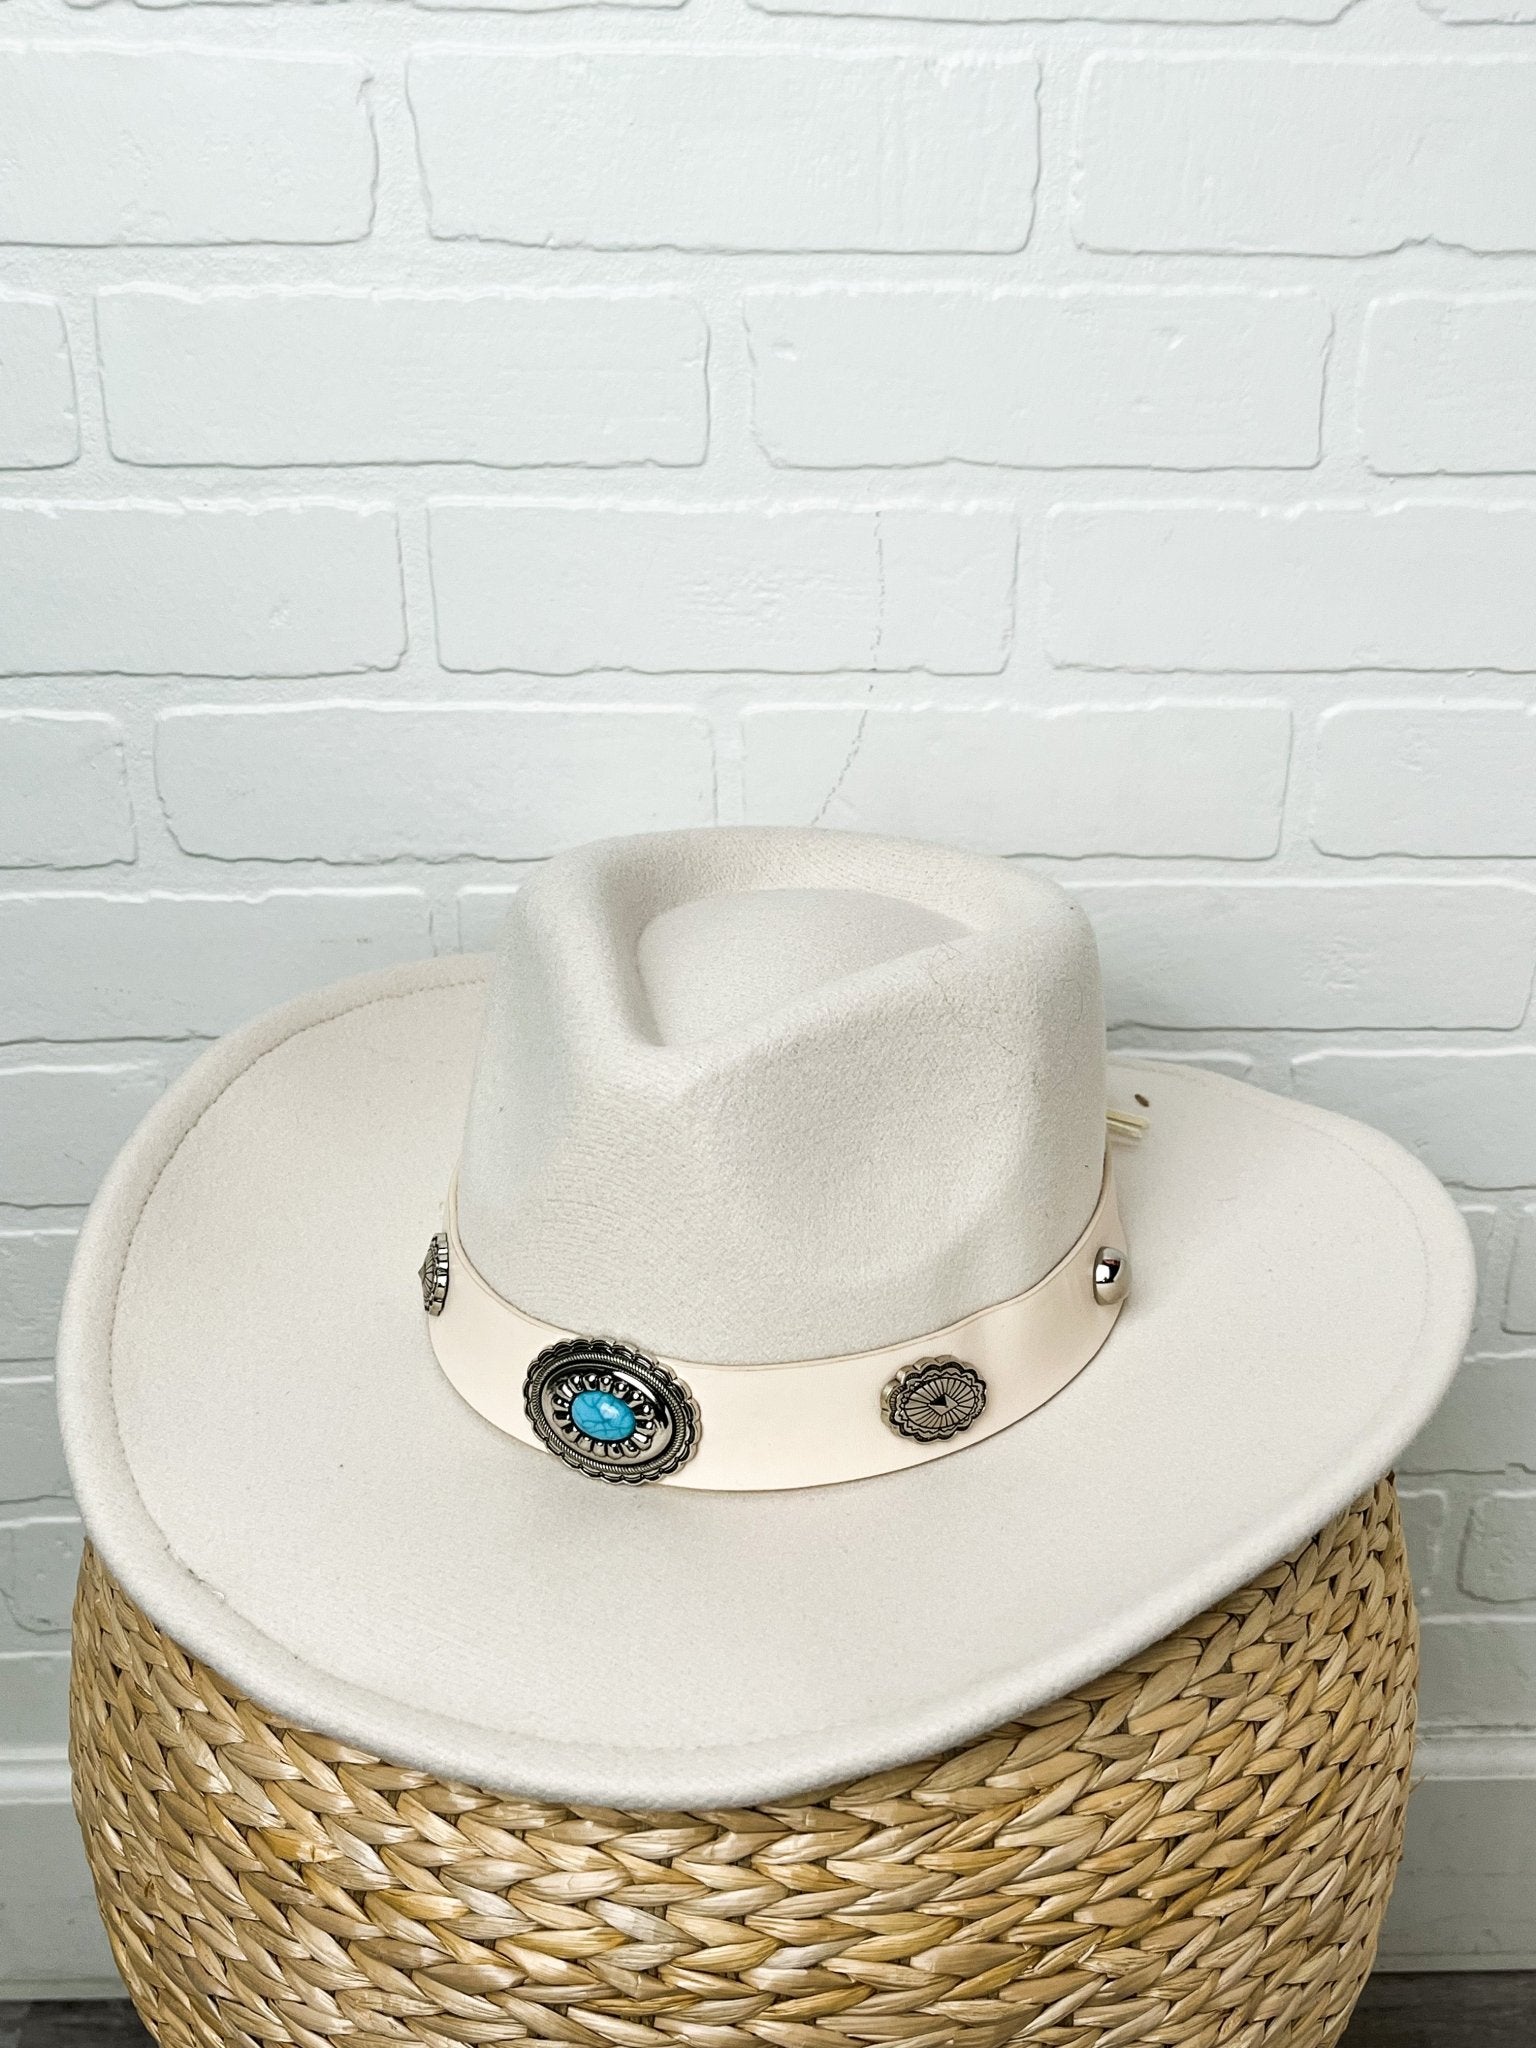 Boho strap cowboy hat white - Trendy Hats at Lush Fashion Lounge Boutique in Oklahoma City